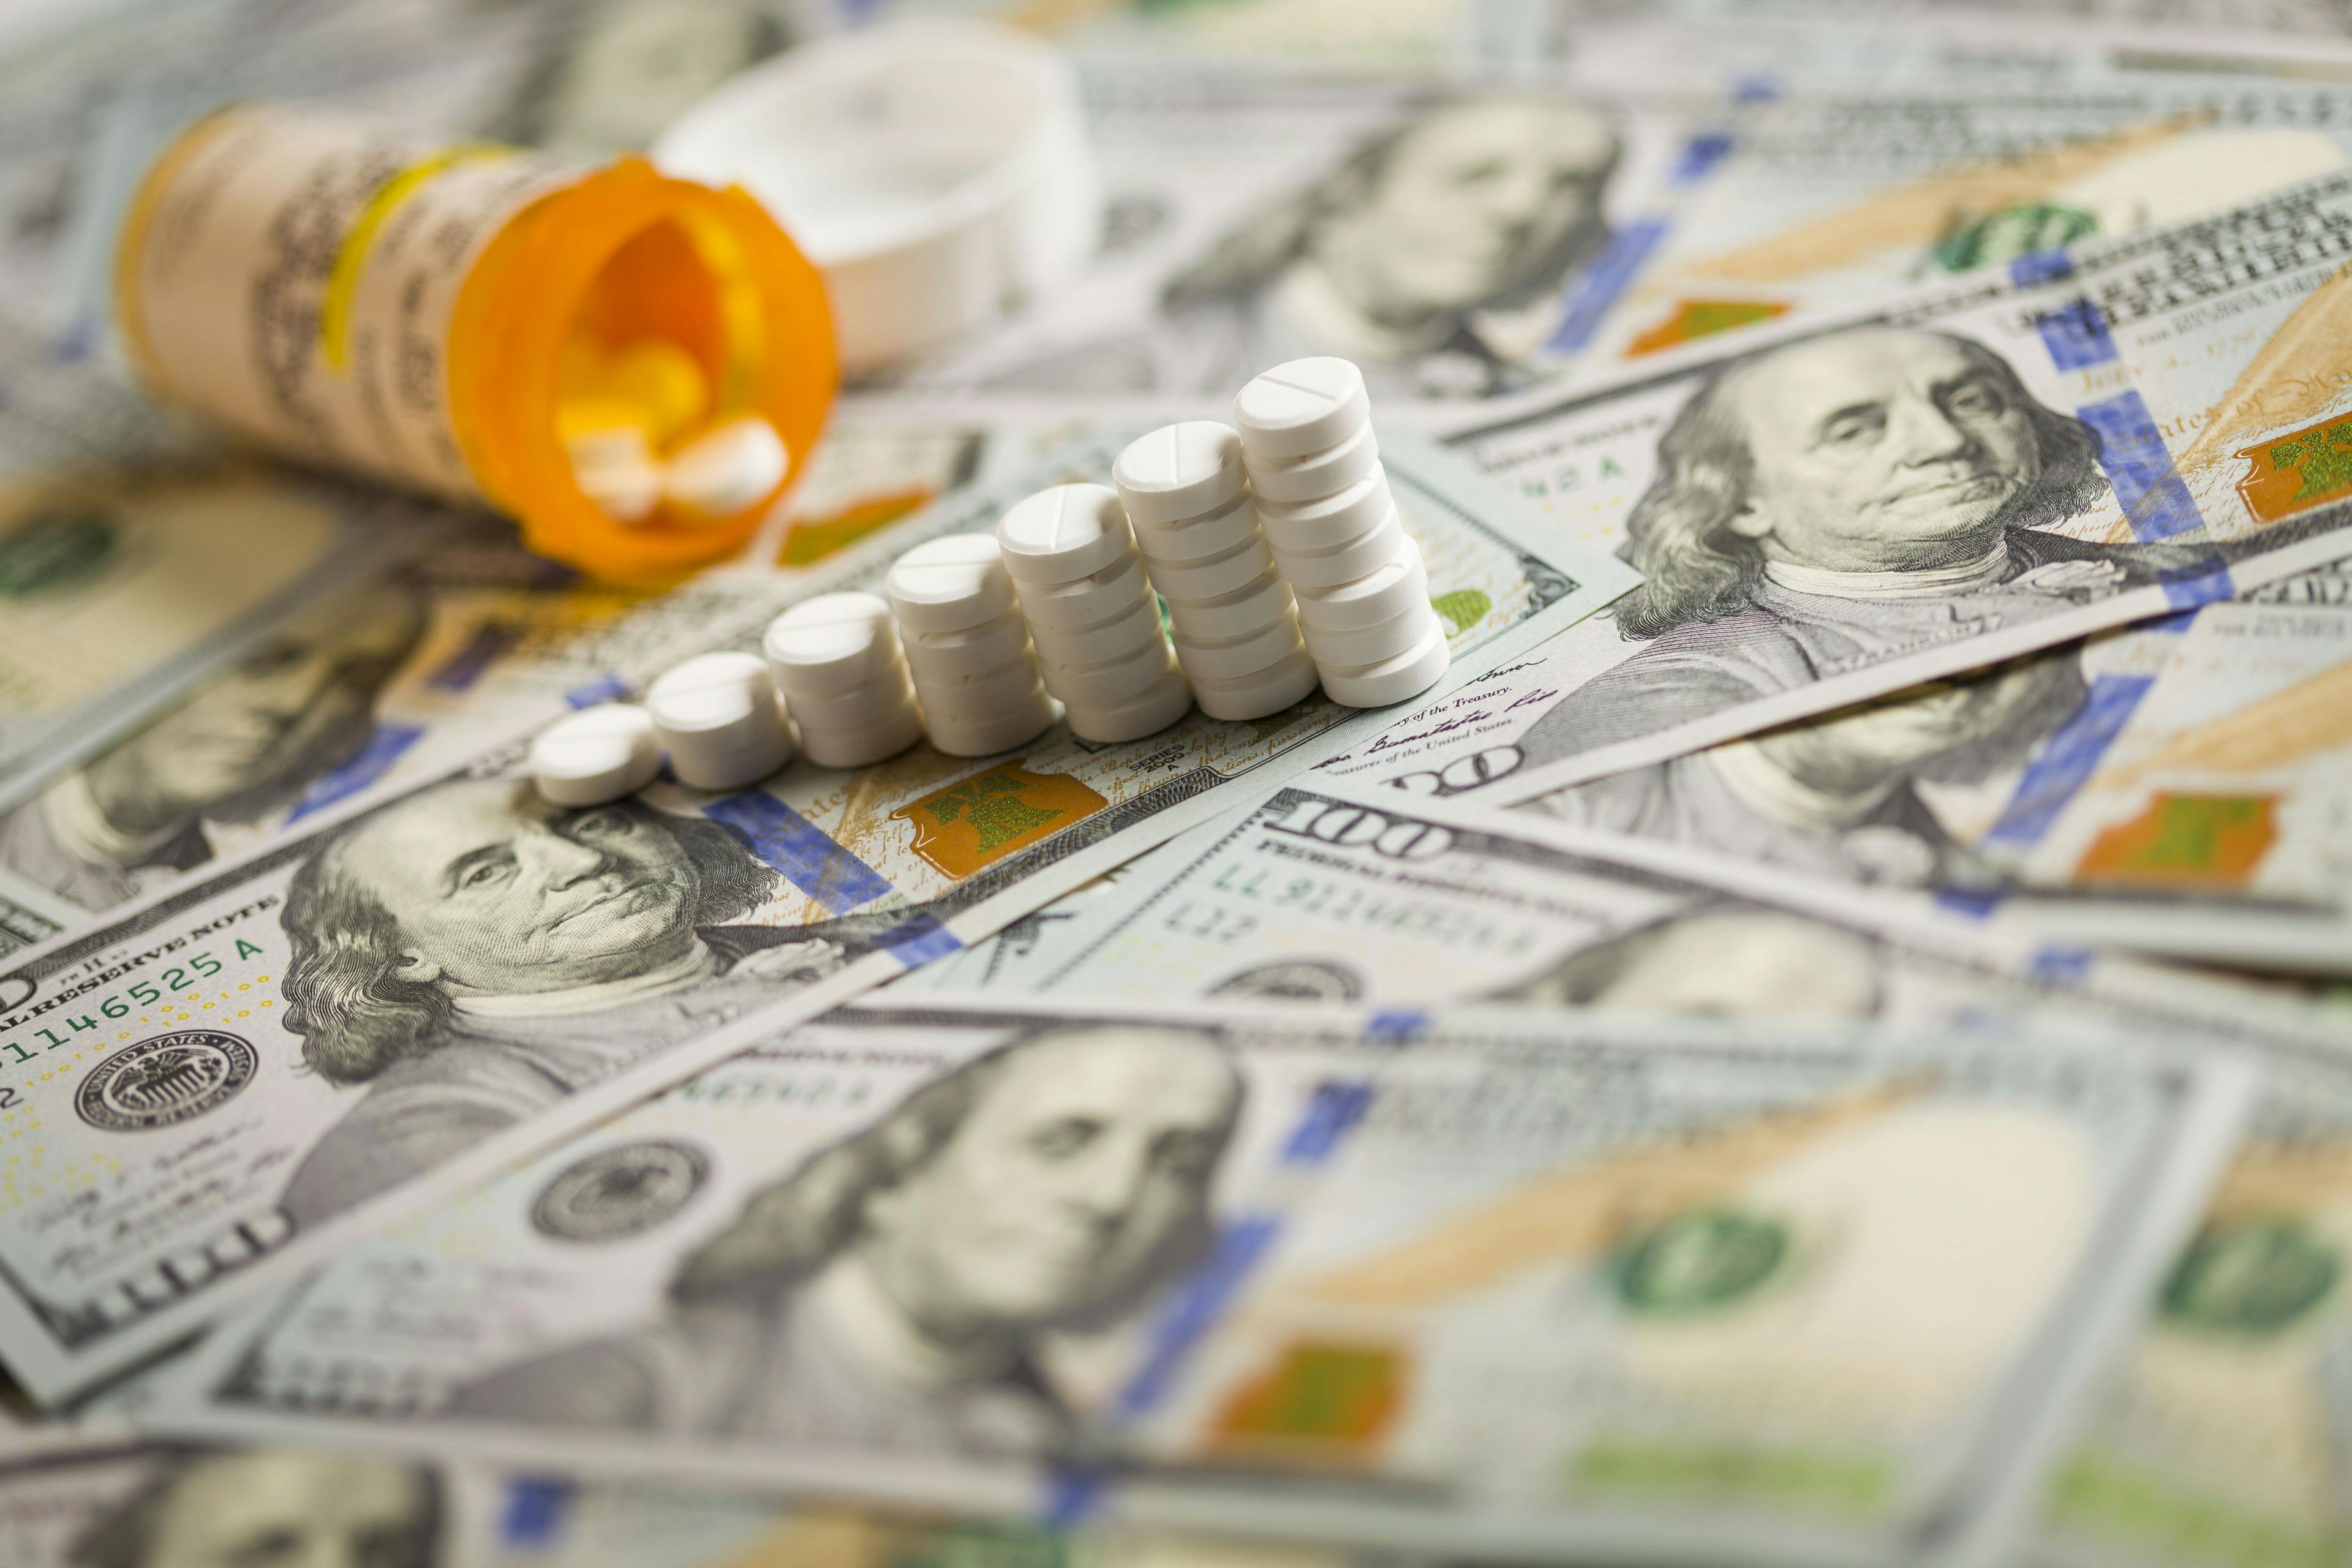 Increase In Prescription Spending Reported in 2021